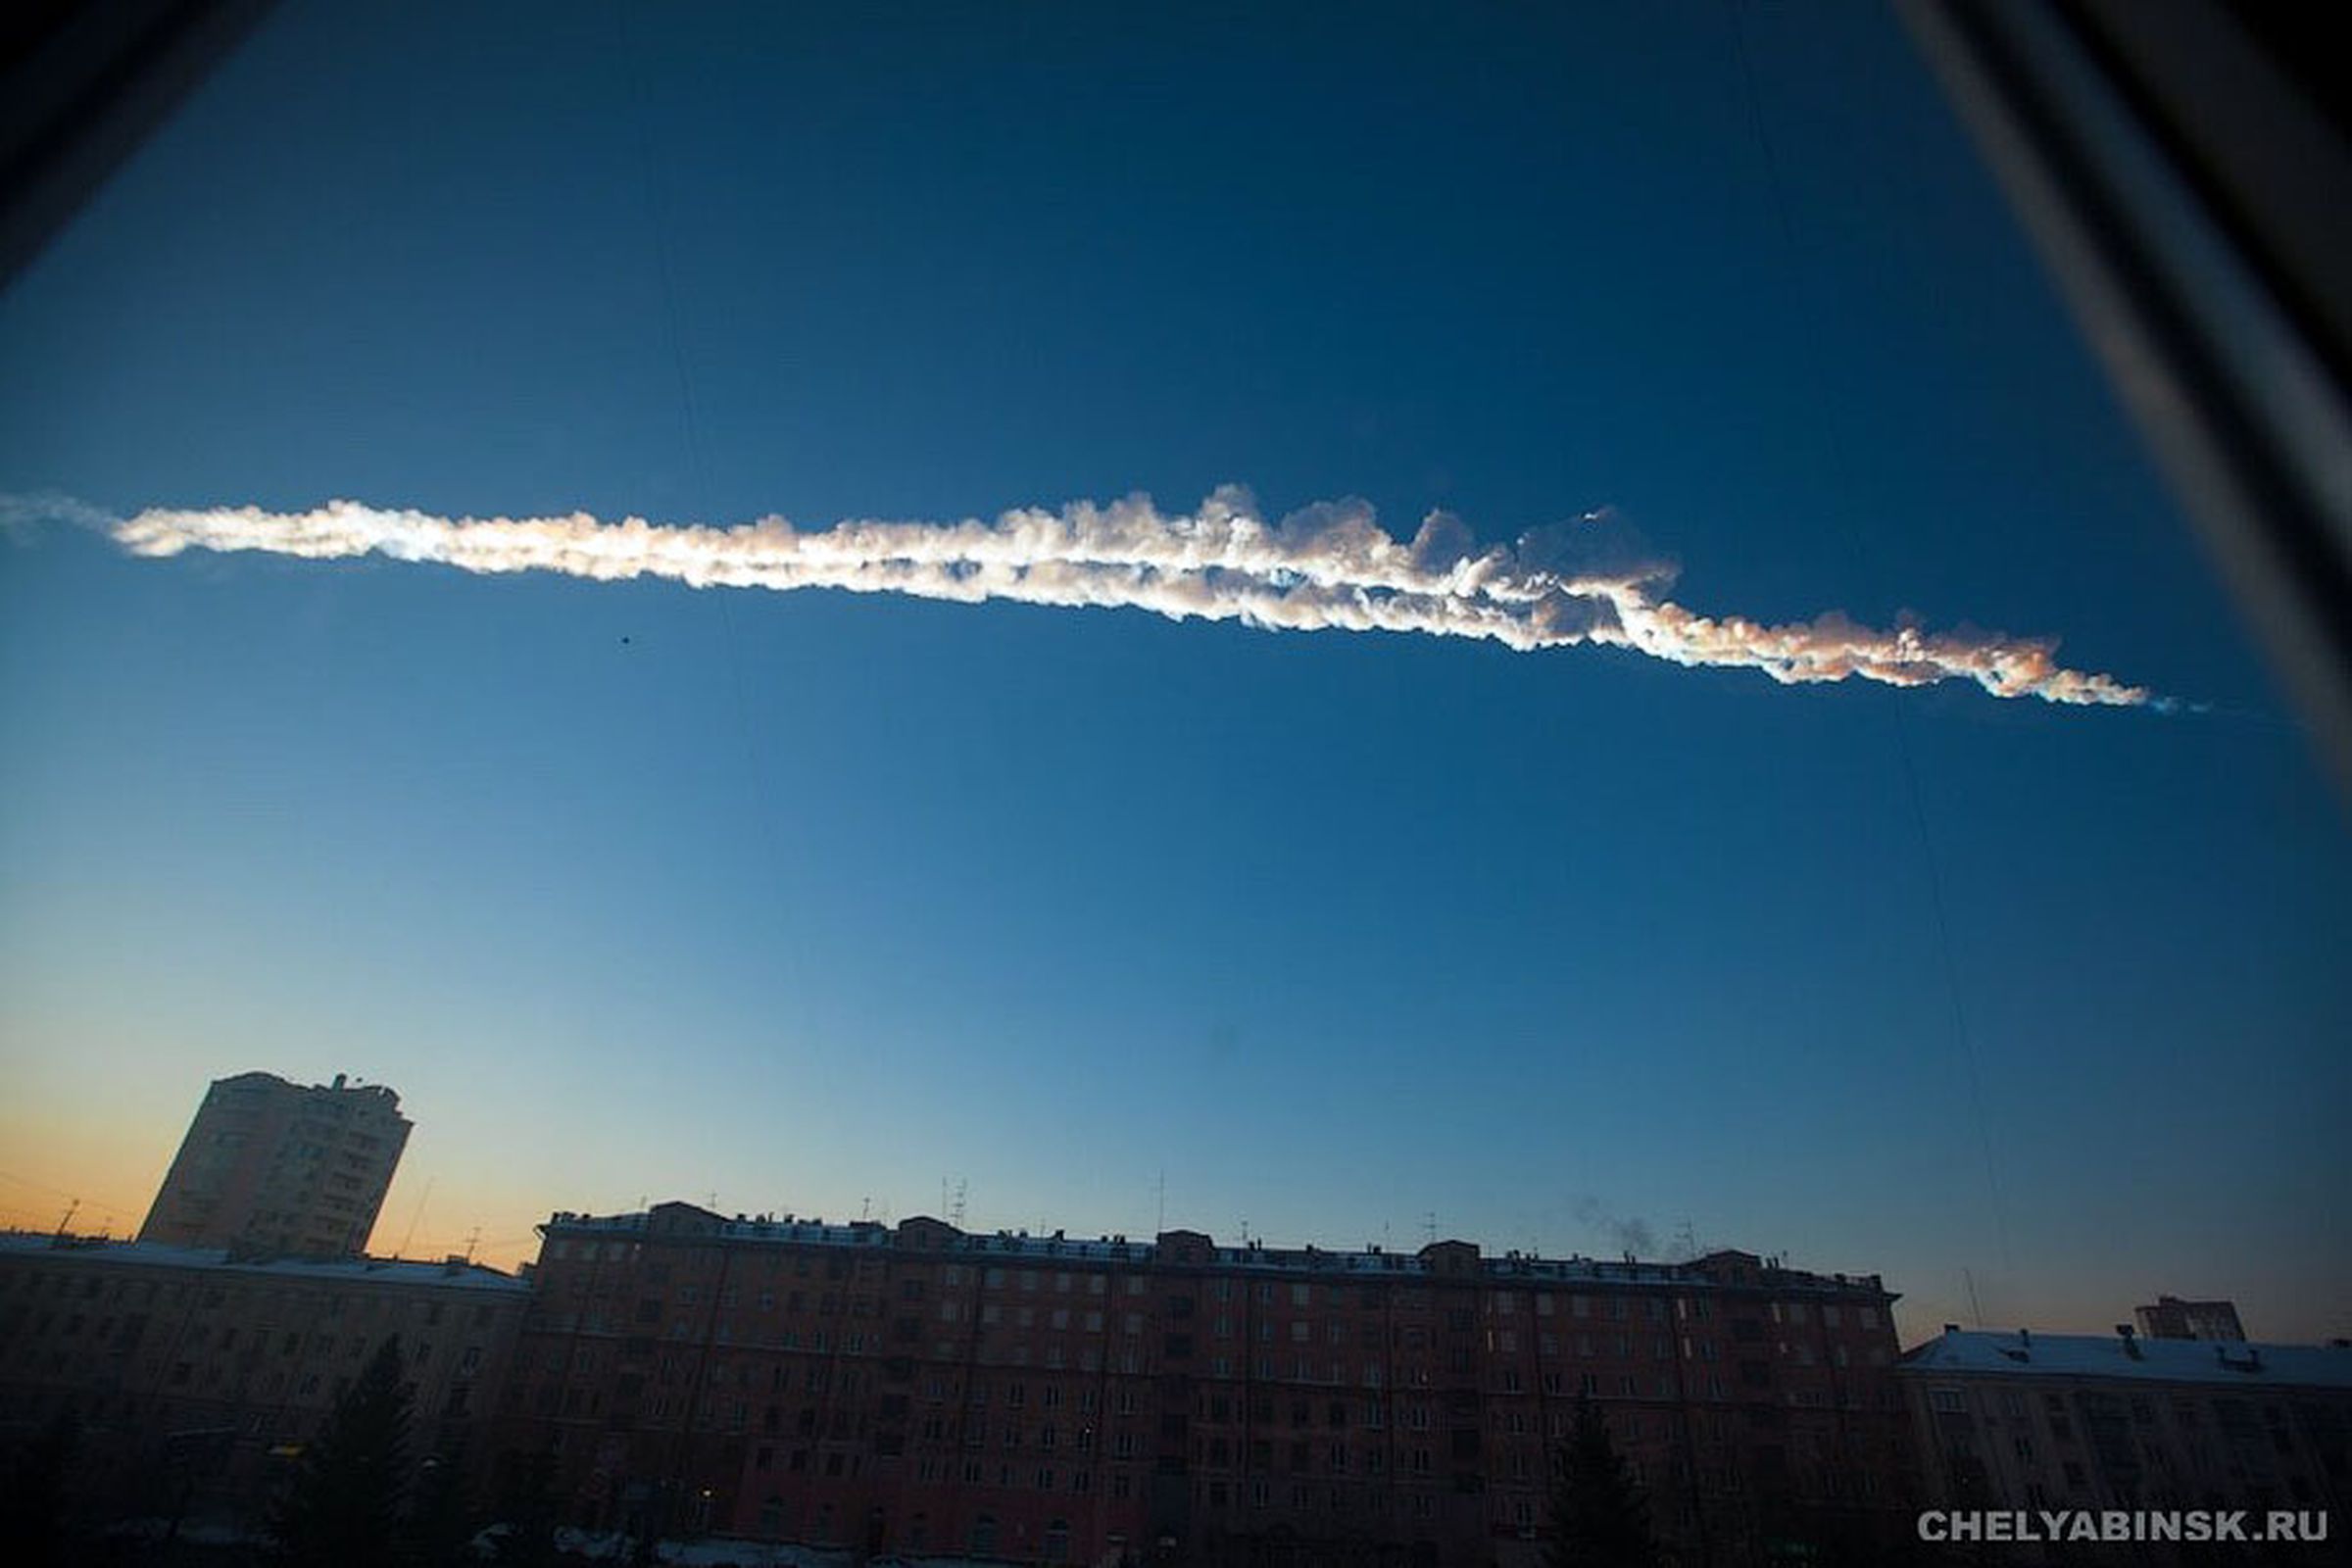 russia meteor (chelyabinsk.ru)